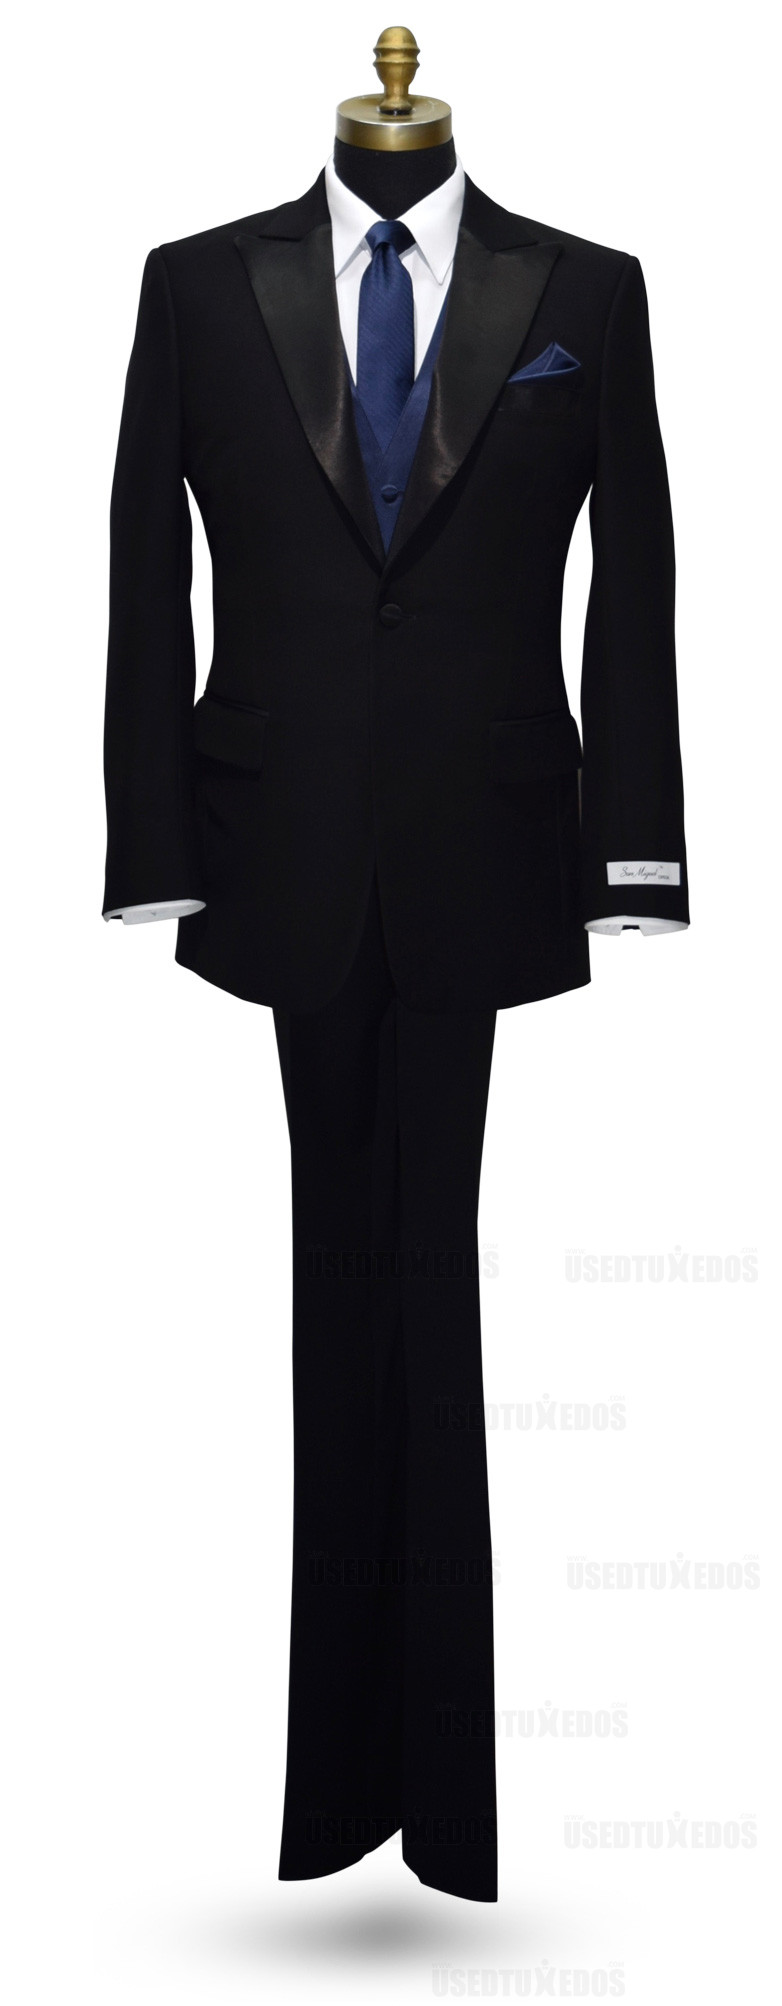 San Miguel black peak lapel tuxedo with navy blue vest and navy blue long tie